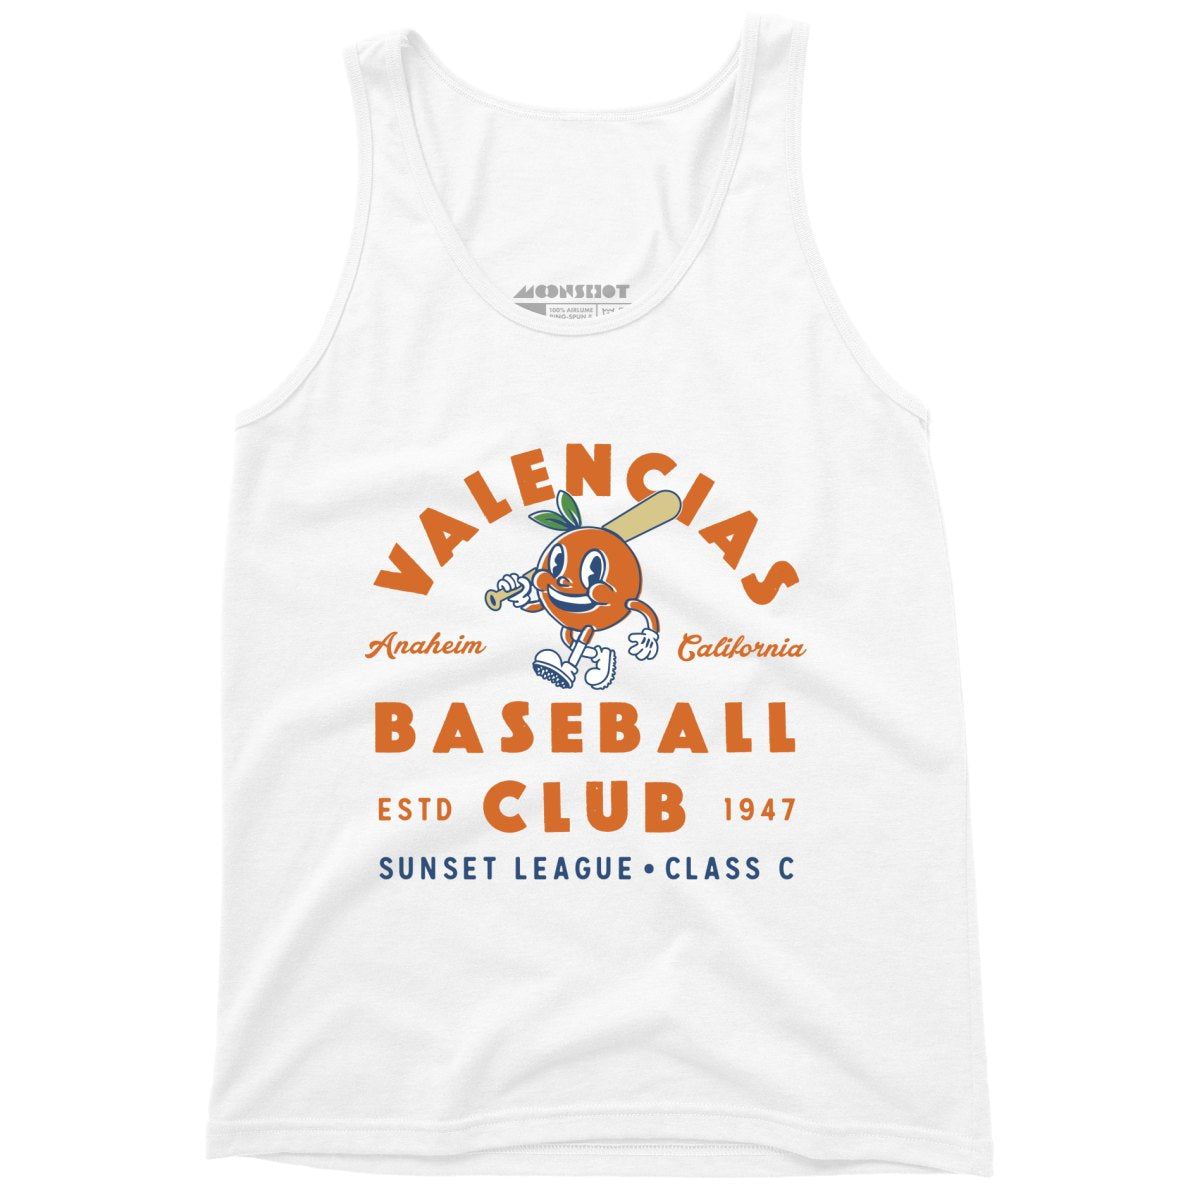 Anaheim Valencias - California - Vintage Defunct Baseball Teams - Unisex Tank Top